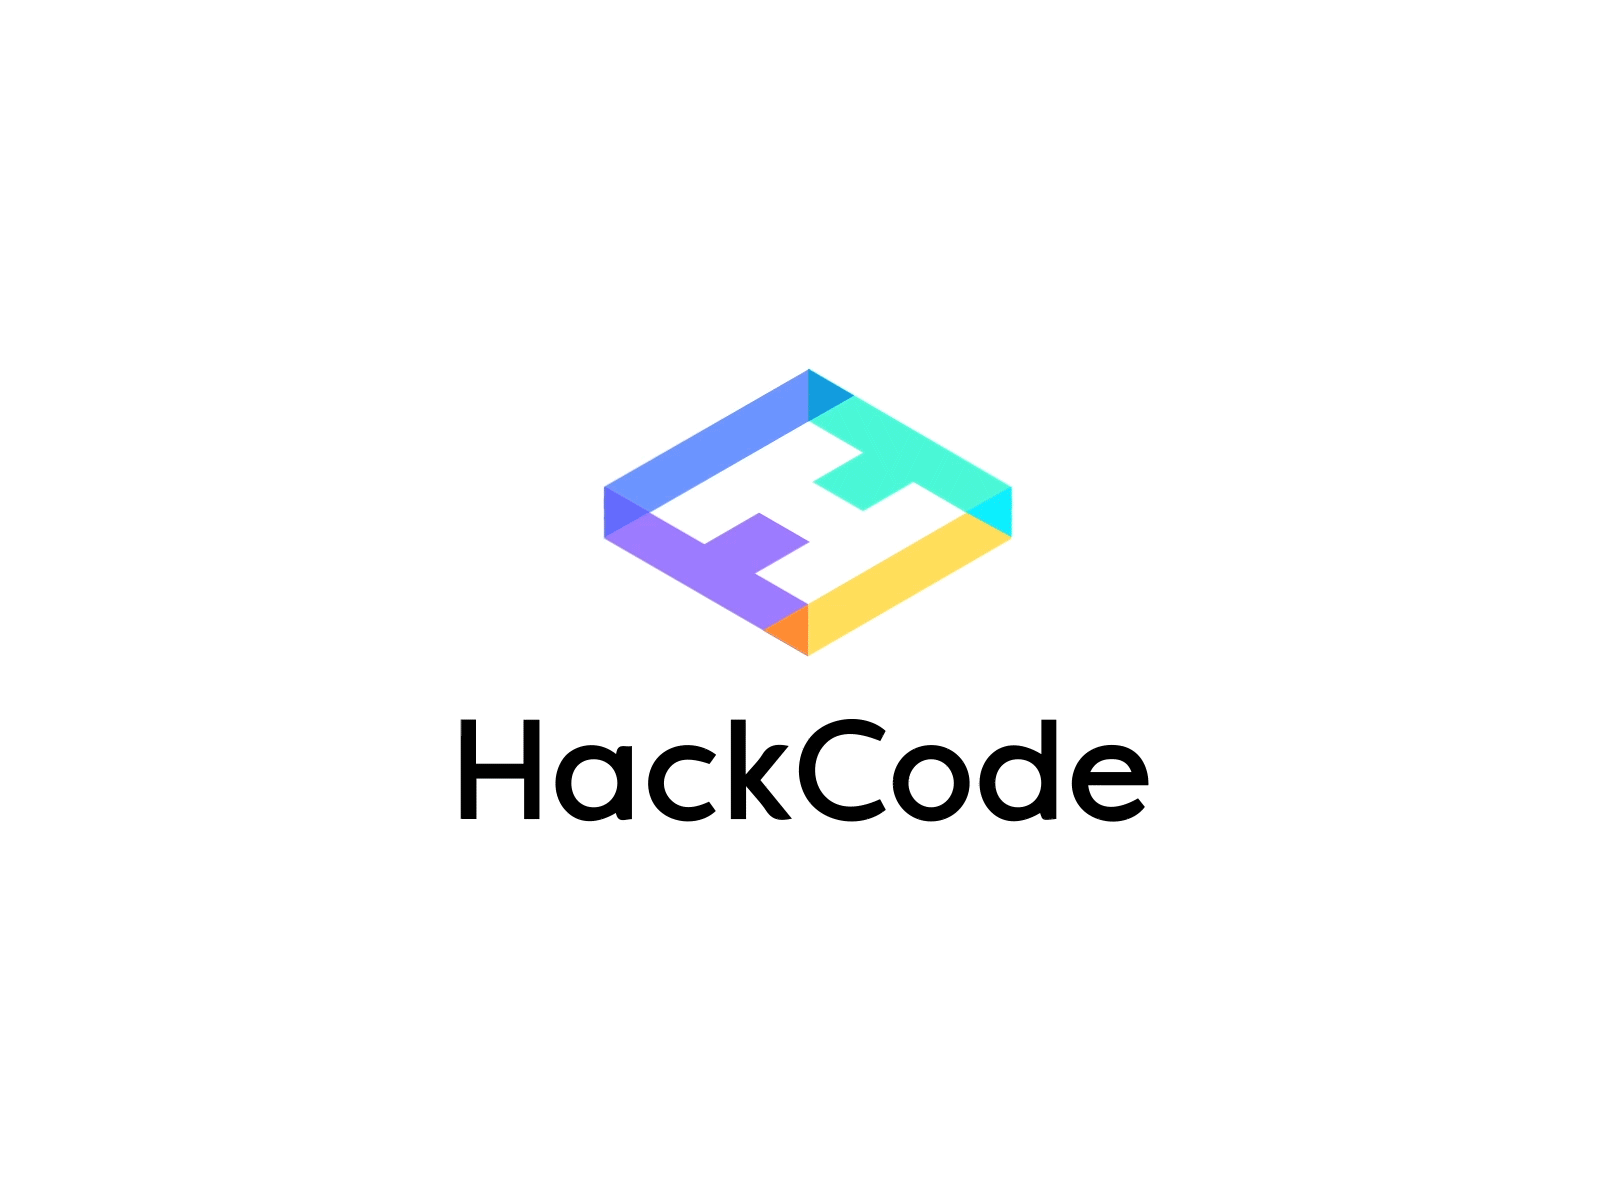 HackCode - Logo Animation by Benjamin Ulmet on Dribbble